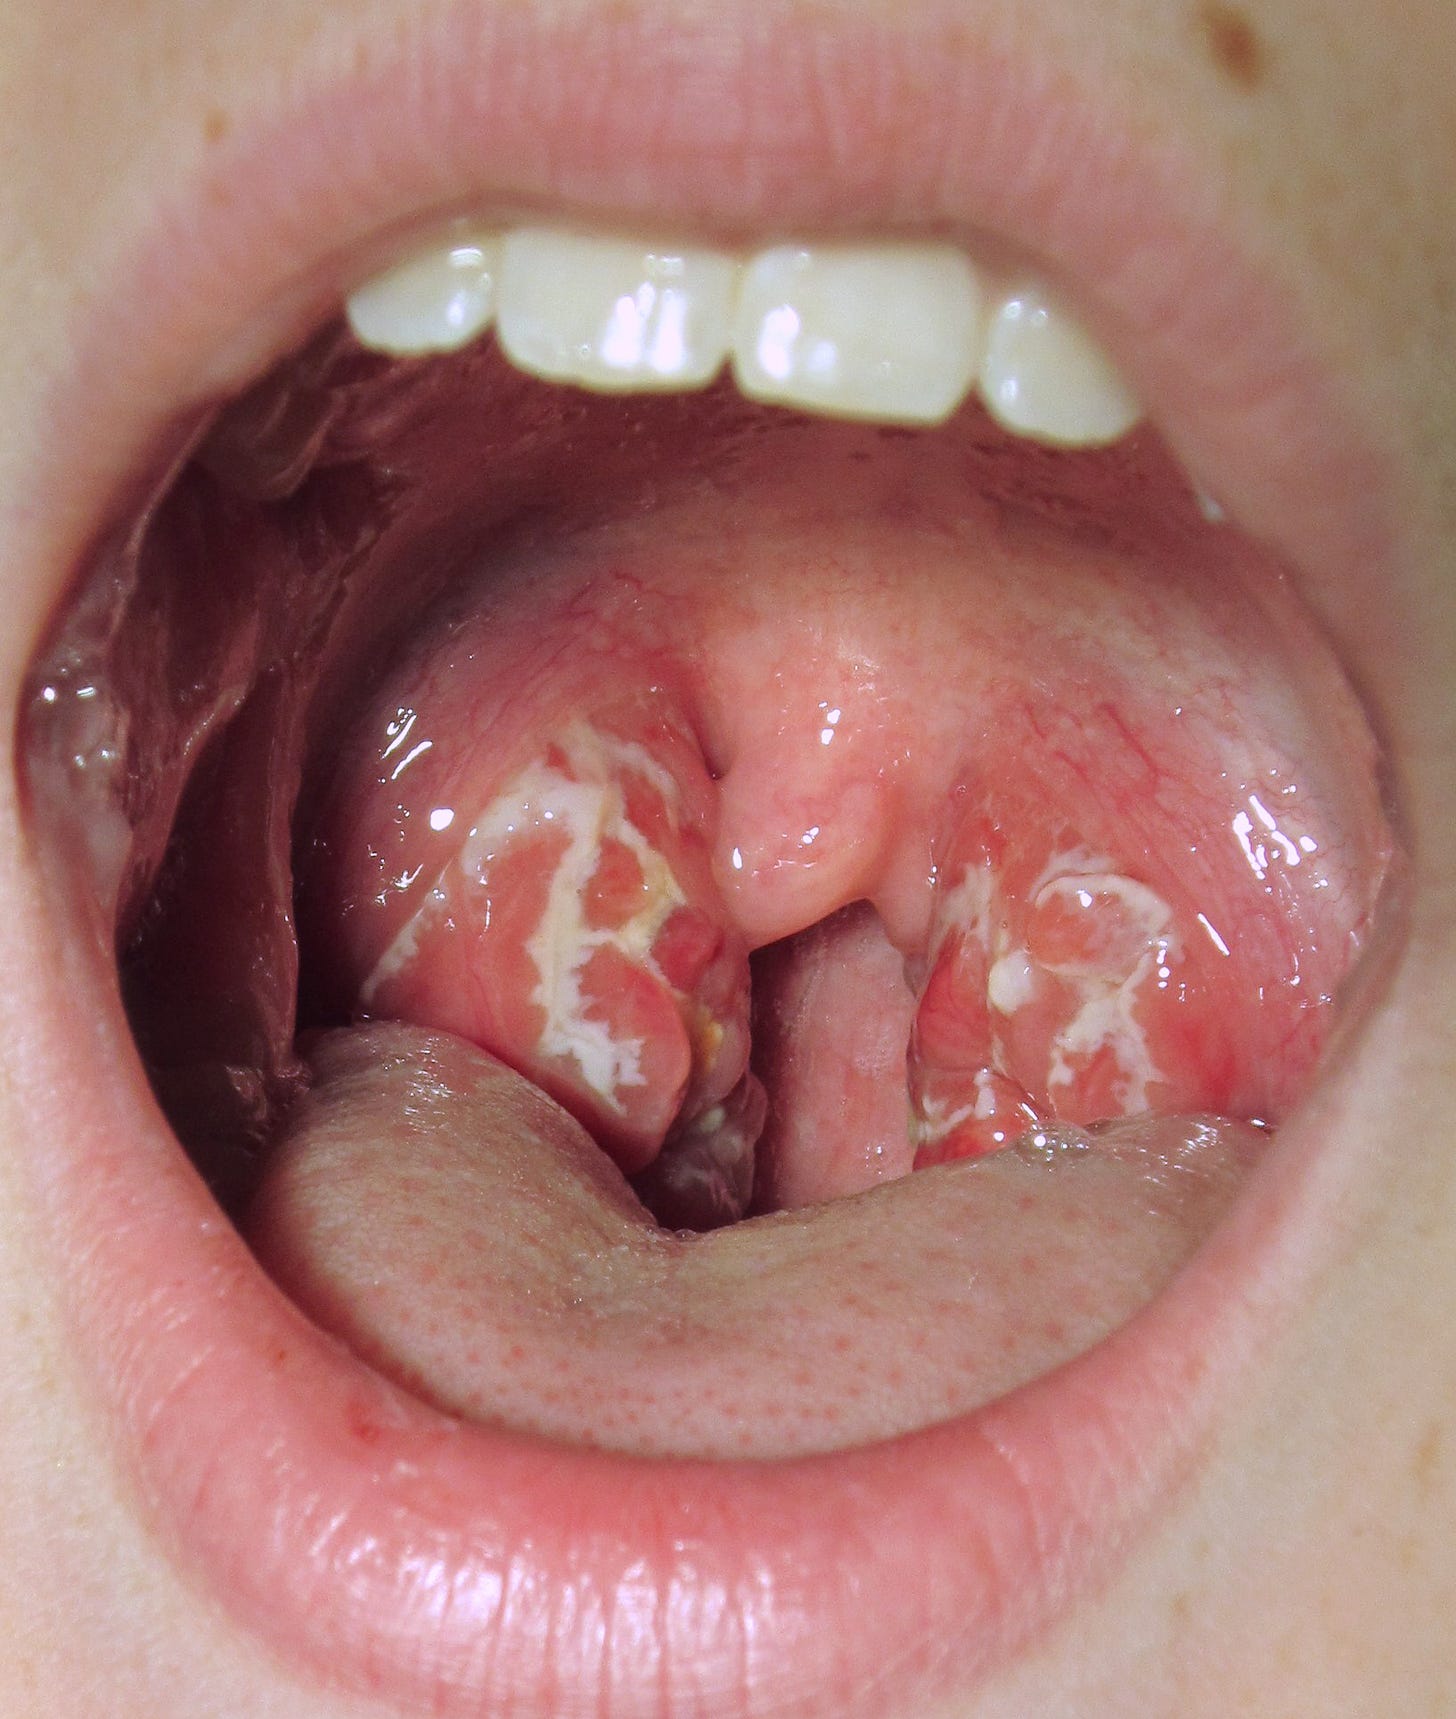 Streptococcal pharyngitis - Wikipedia